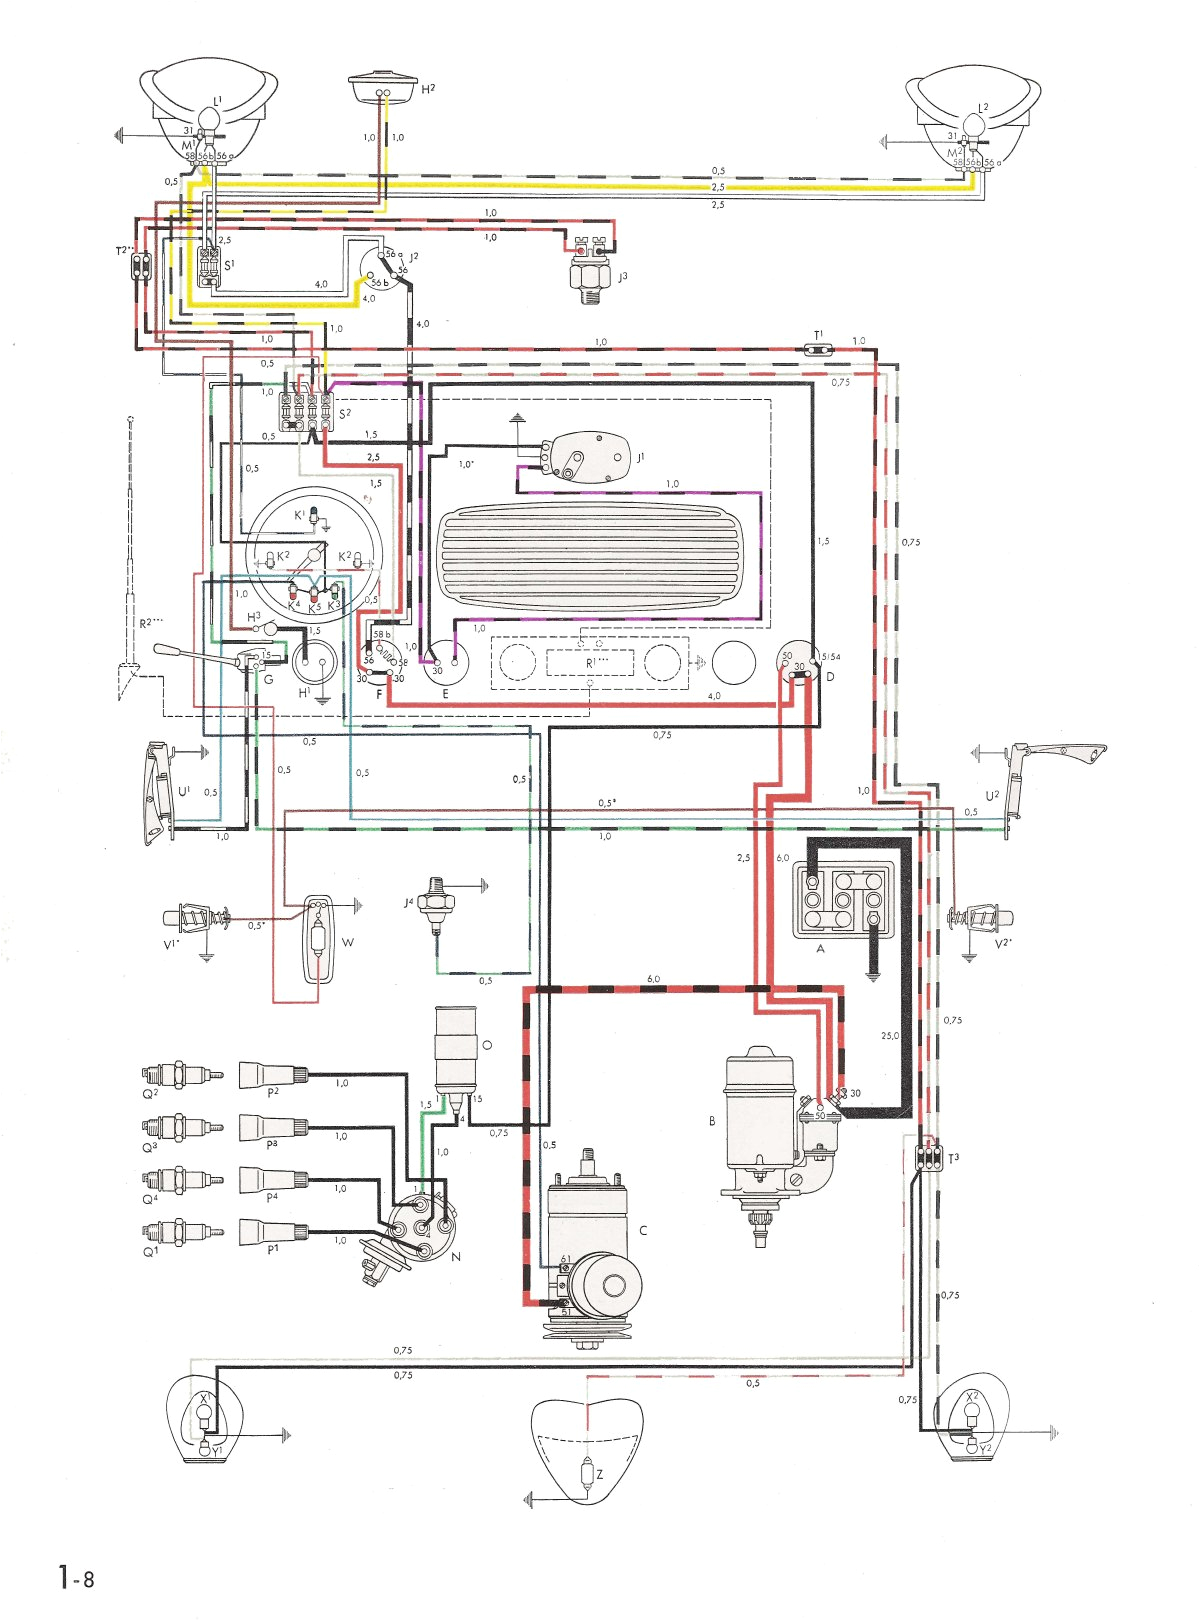 thesamba com type 1 wiring diagrams volkswagen wiring diagram 1973 vw beetle